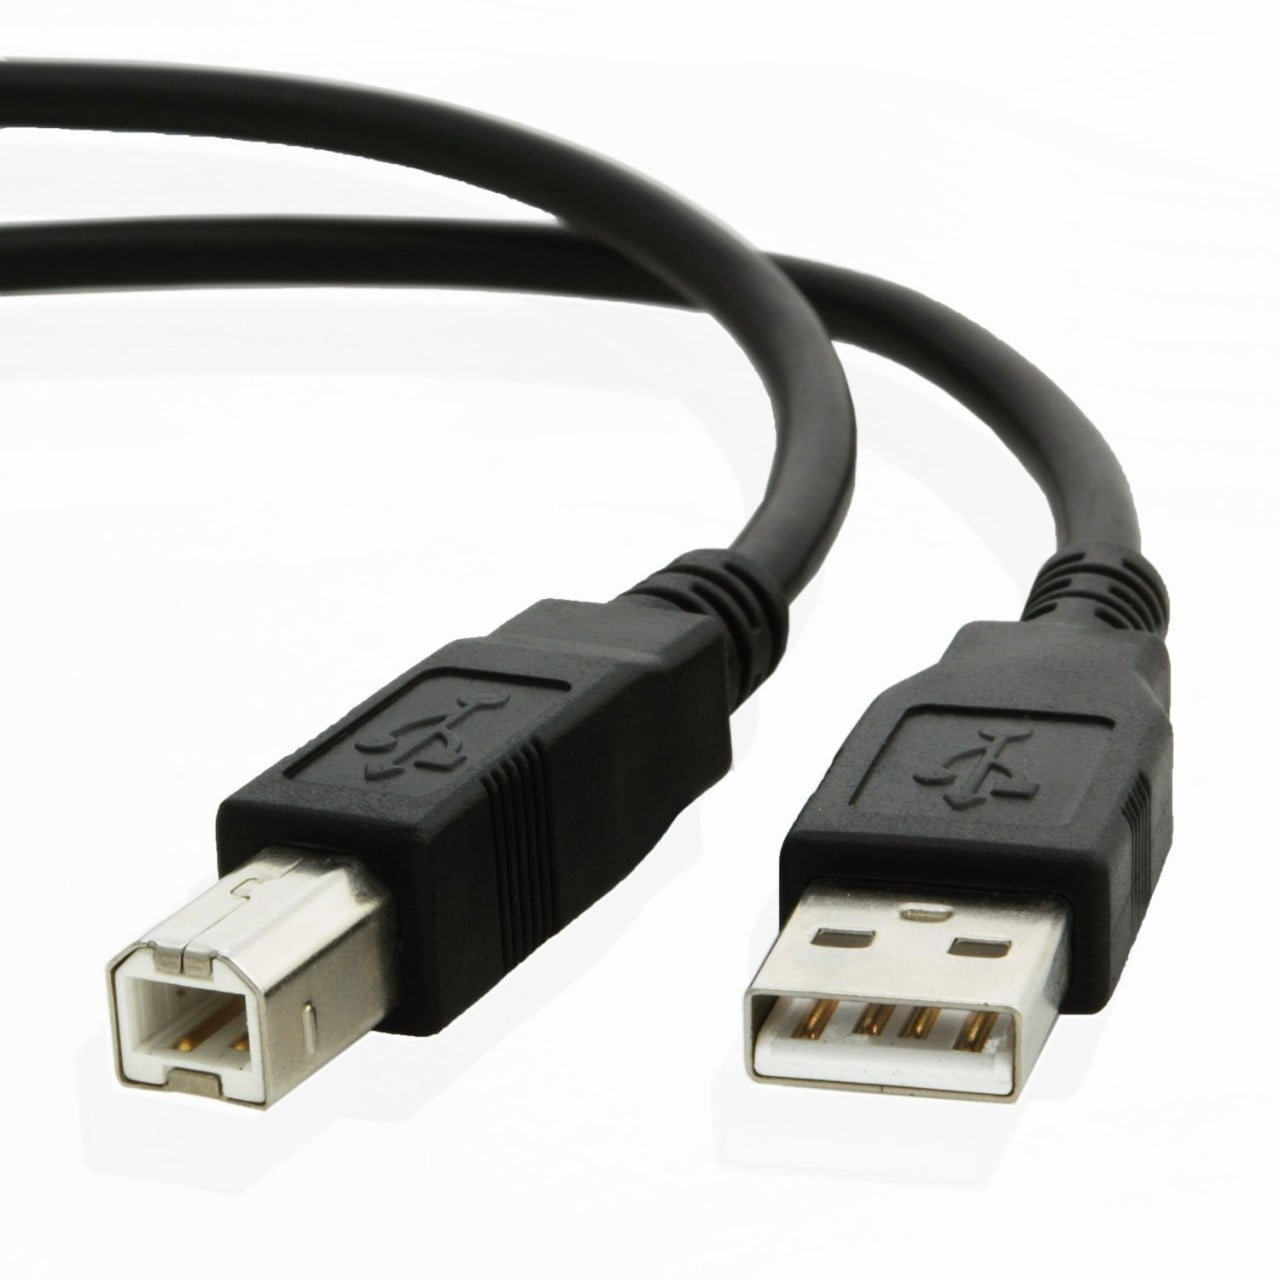 USB Printer Scanner Cable Cord For HP Deskjet F300 F310 F325 F335 952c 959c 